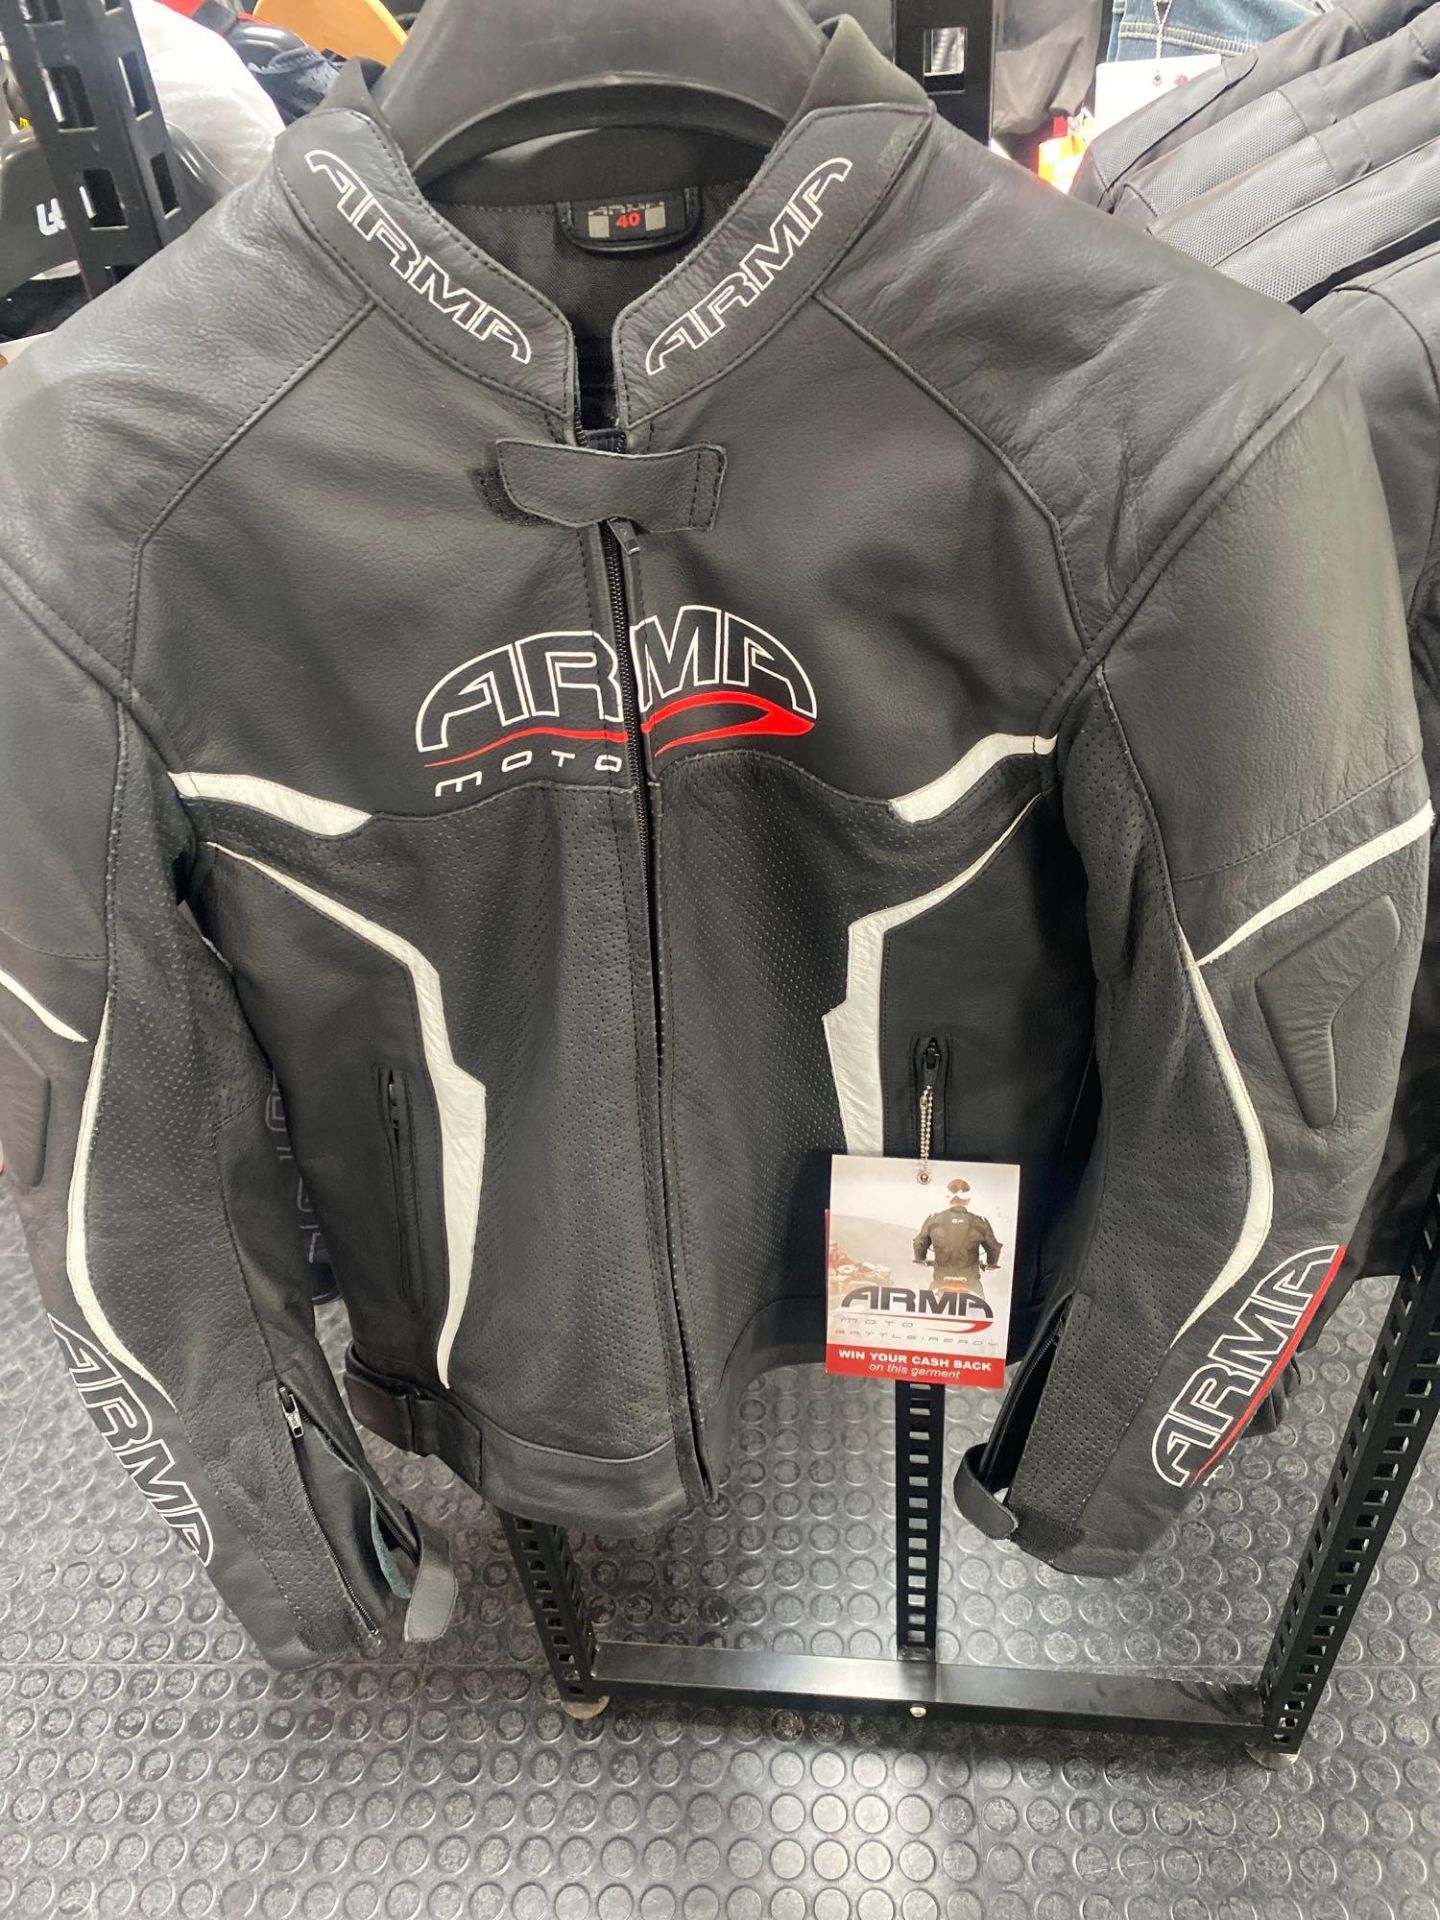 Arma Raiden leather jacket size 40, RRP £199.99